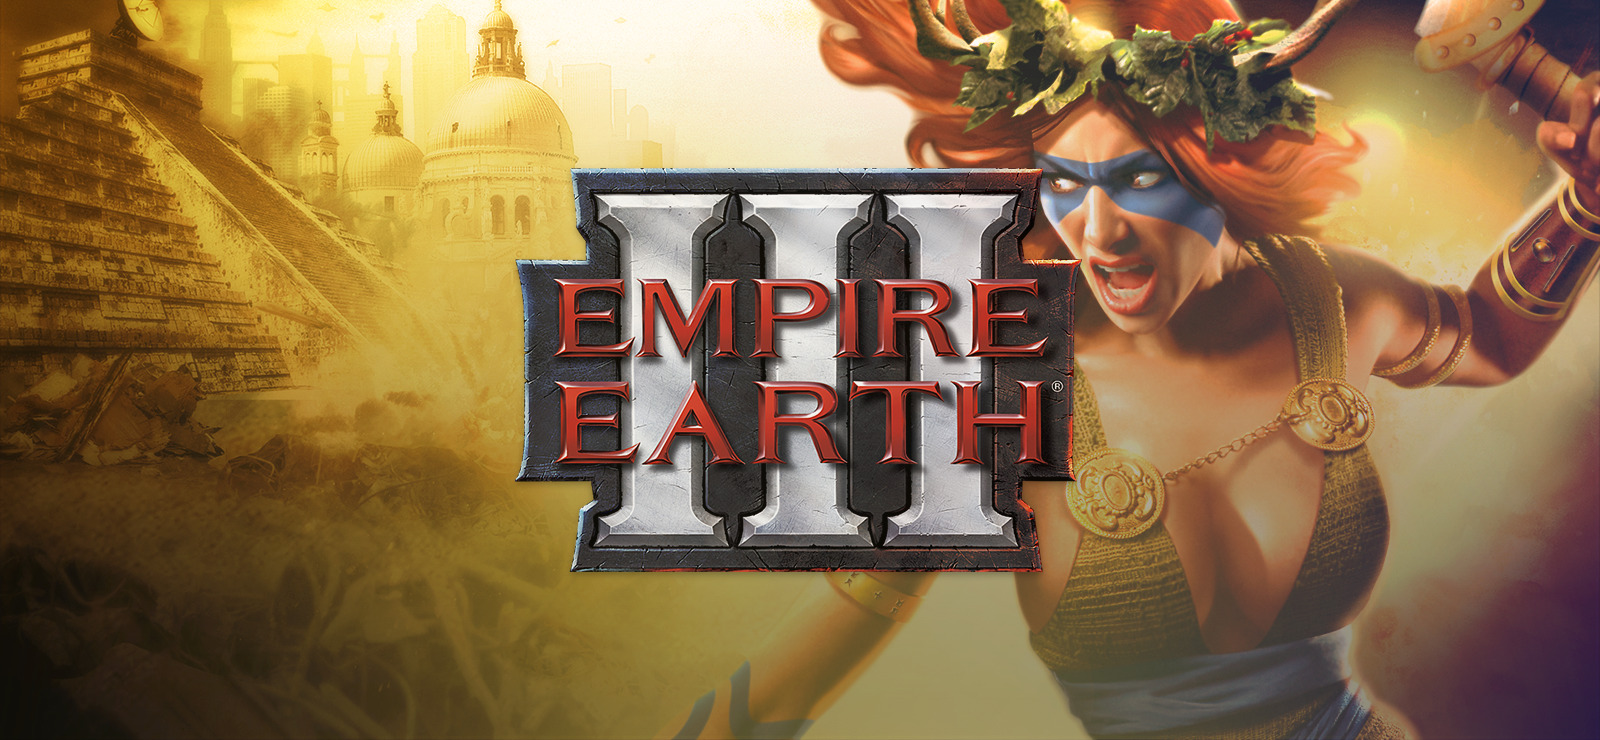 empire earth iii iso download